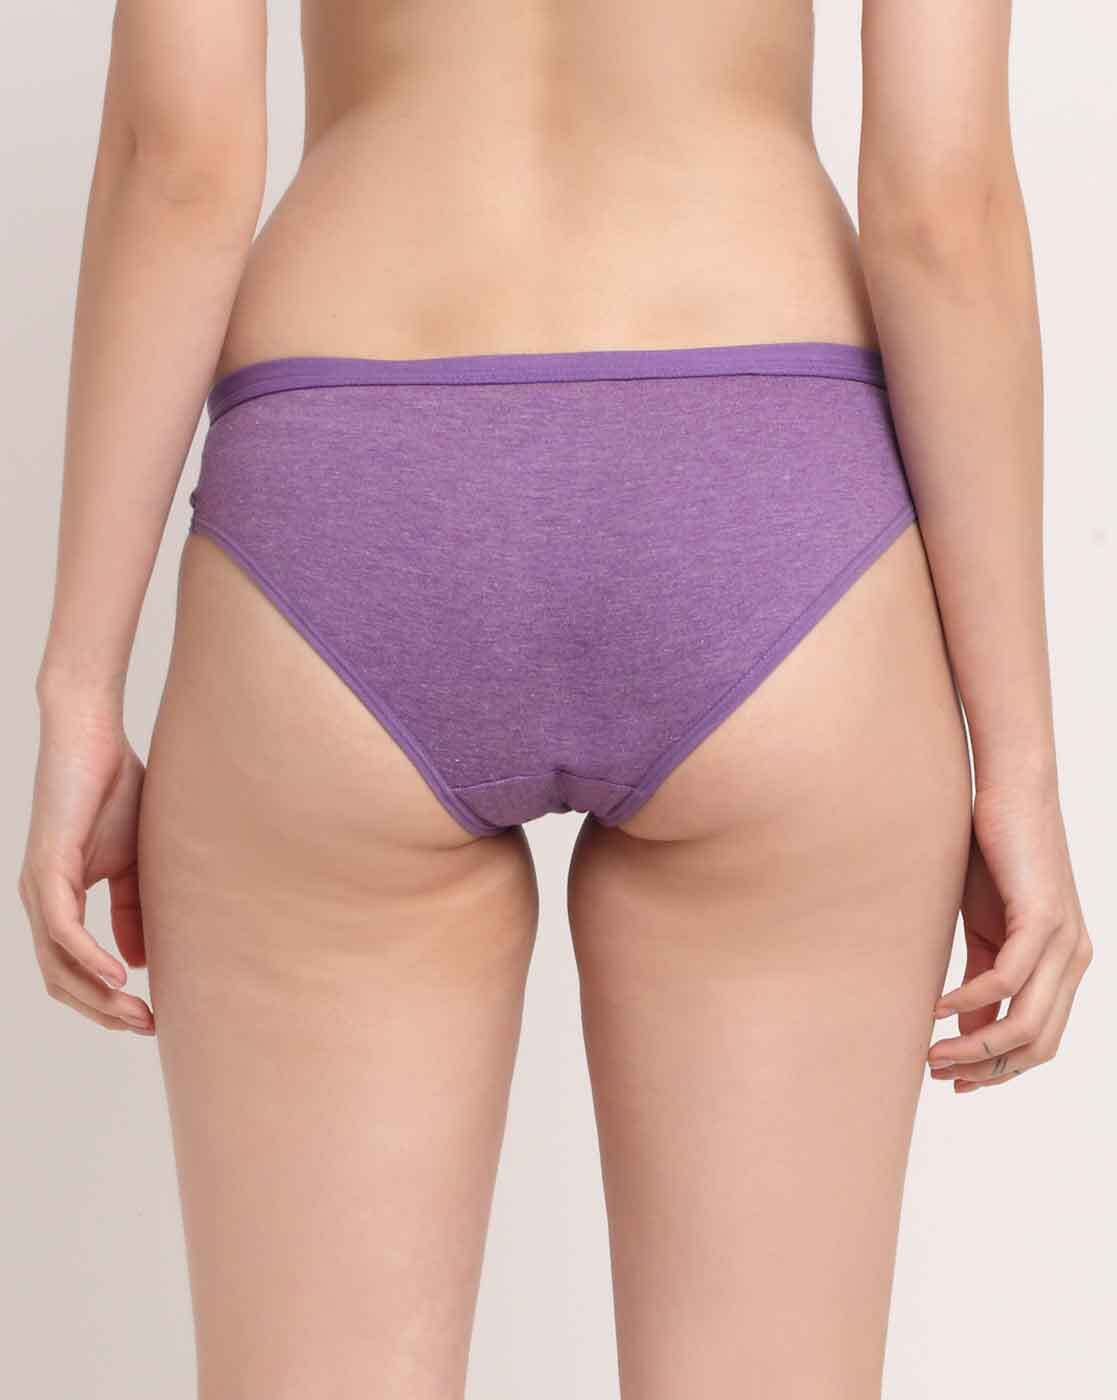 Shero StayFresh Cross Hipster Panties, Bacteria Resistant Panties for Women  with Sensitive Skin, Purple LG